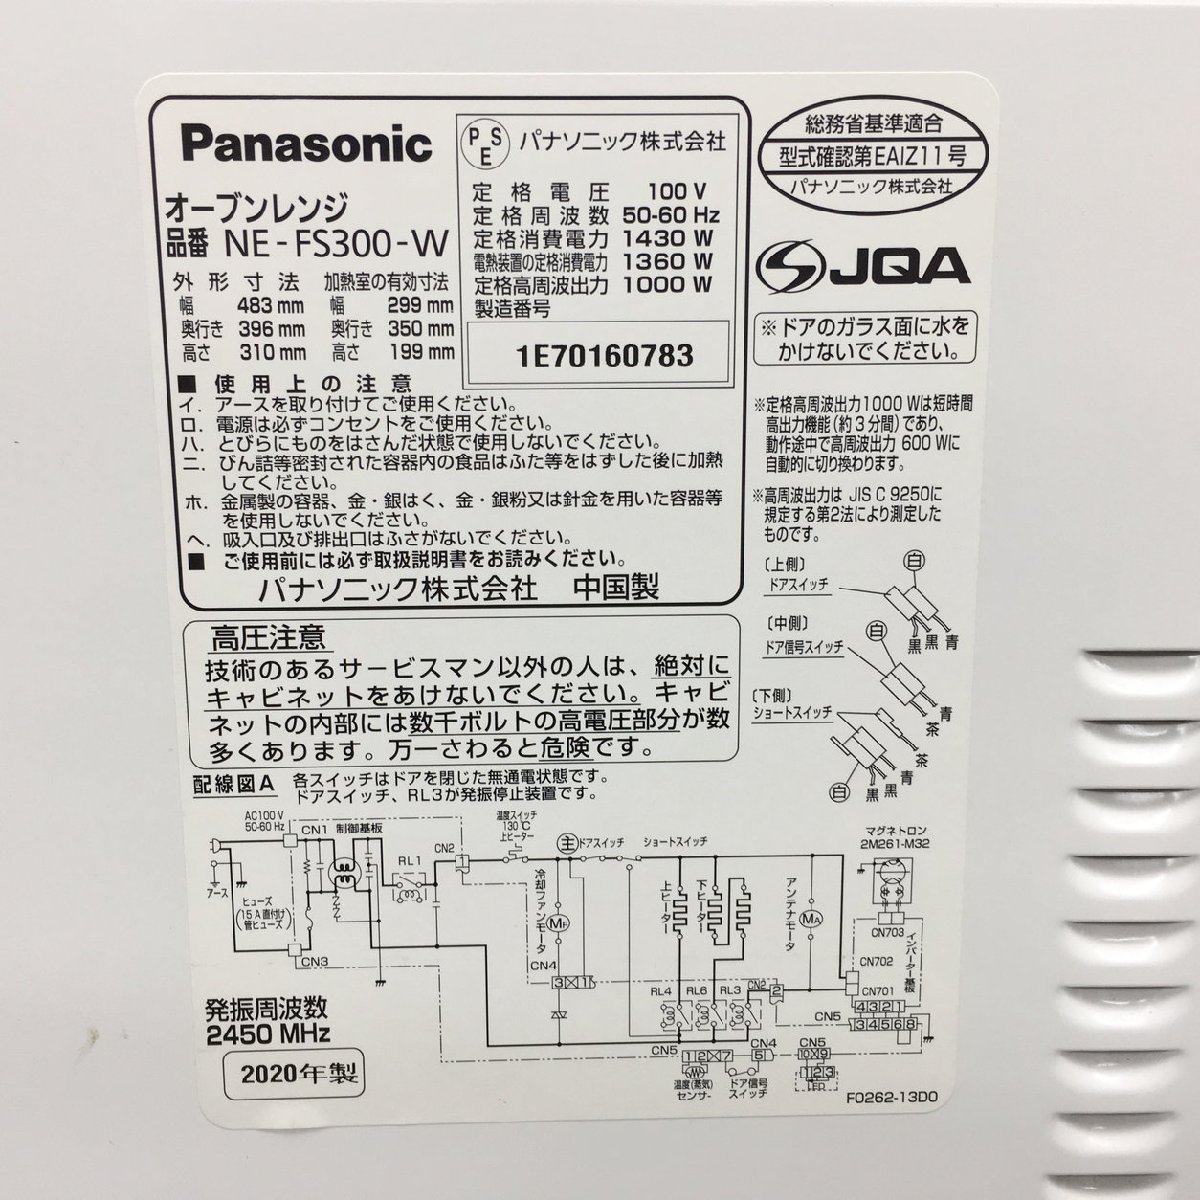  microwave oven NE-FS300-W white 2020 year made Panasonic Panasonic 1000W inverter Flat type inside 23L angle plate attaching beautiful goods 2308LR255